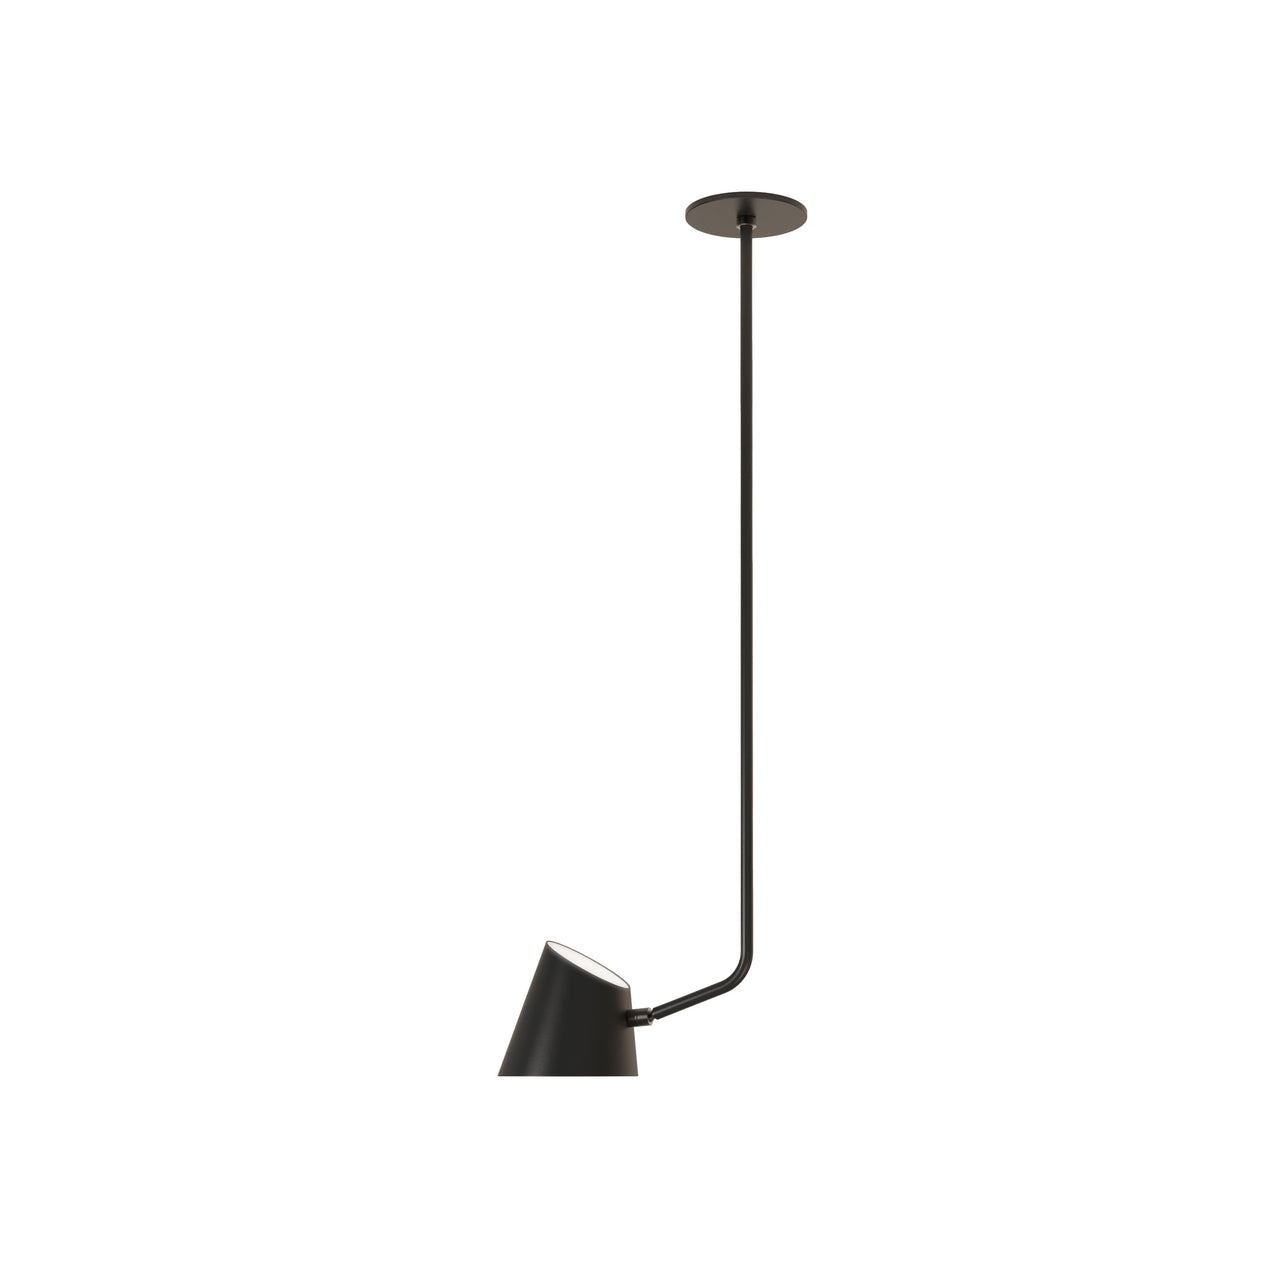 Hartau Simple Ceiling Lamp: Large - 35